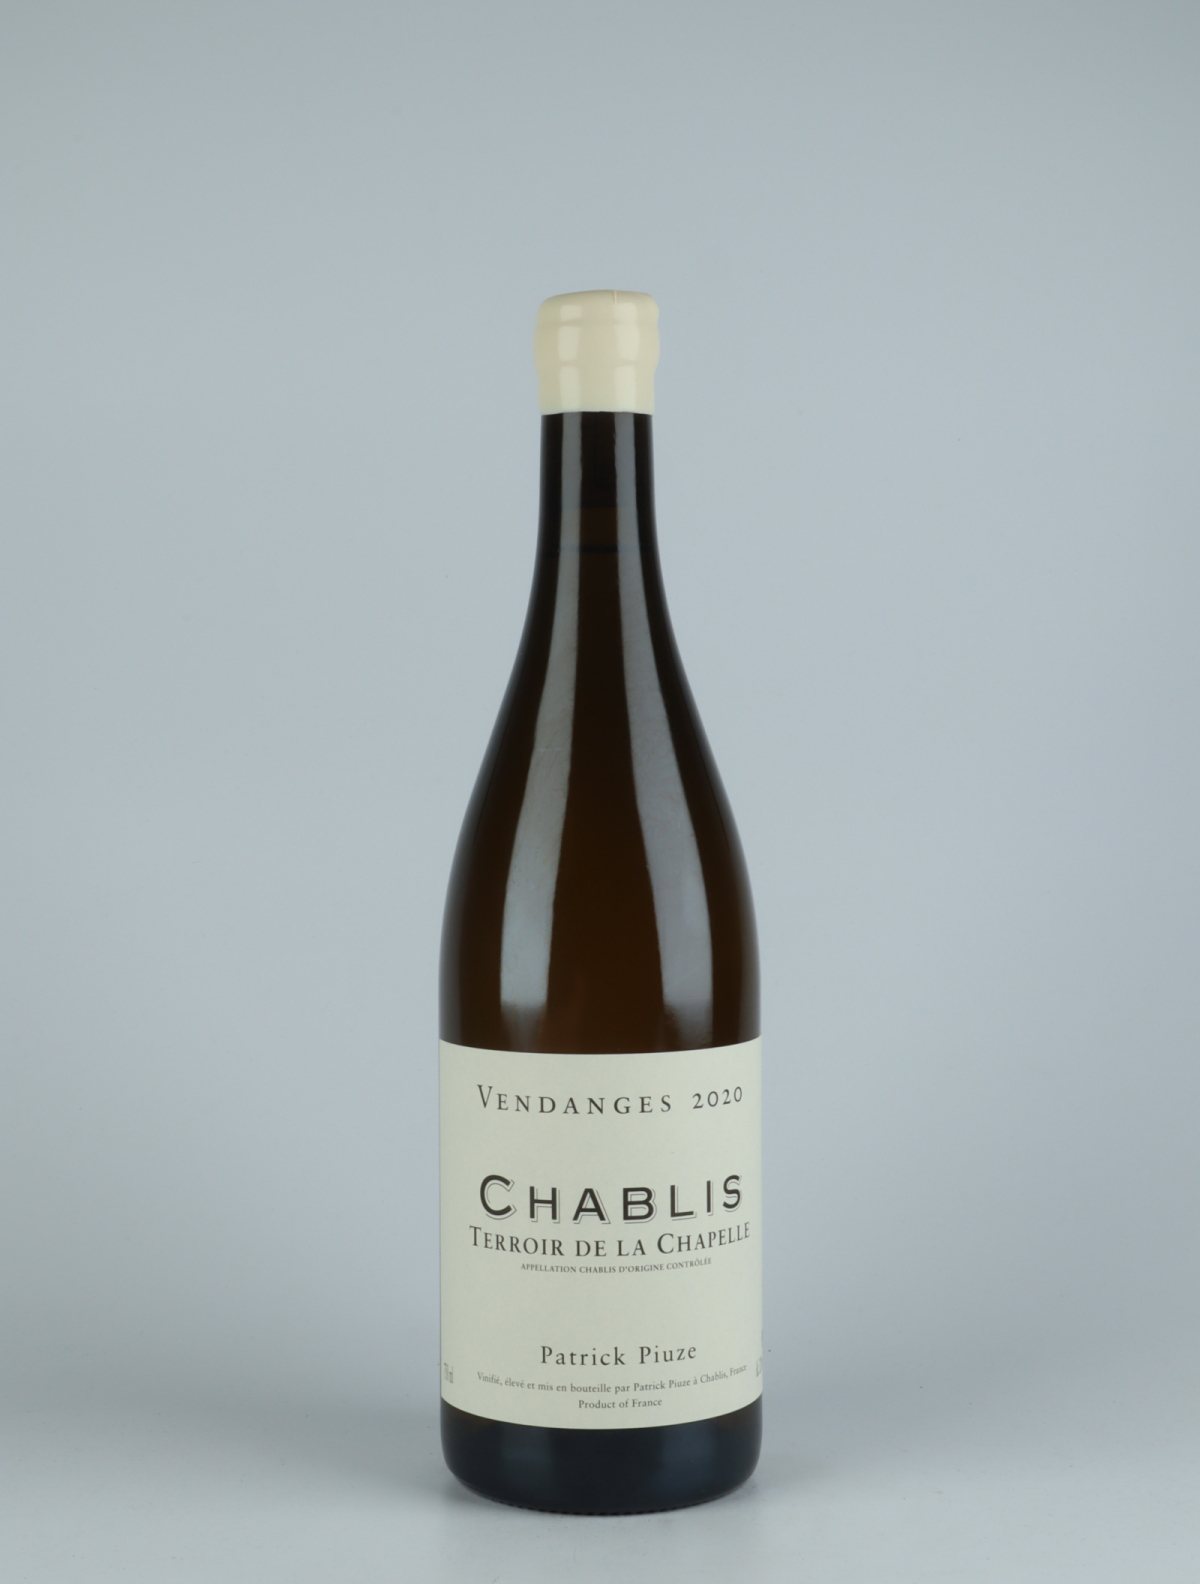 En flaske 2020 Chablis - Terroir de la Chapelle Hvidvin fra Patrick Piuze, Bourgogne i Frankrig